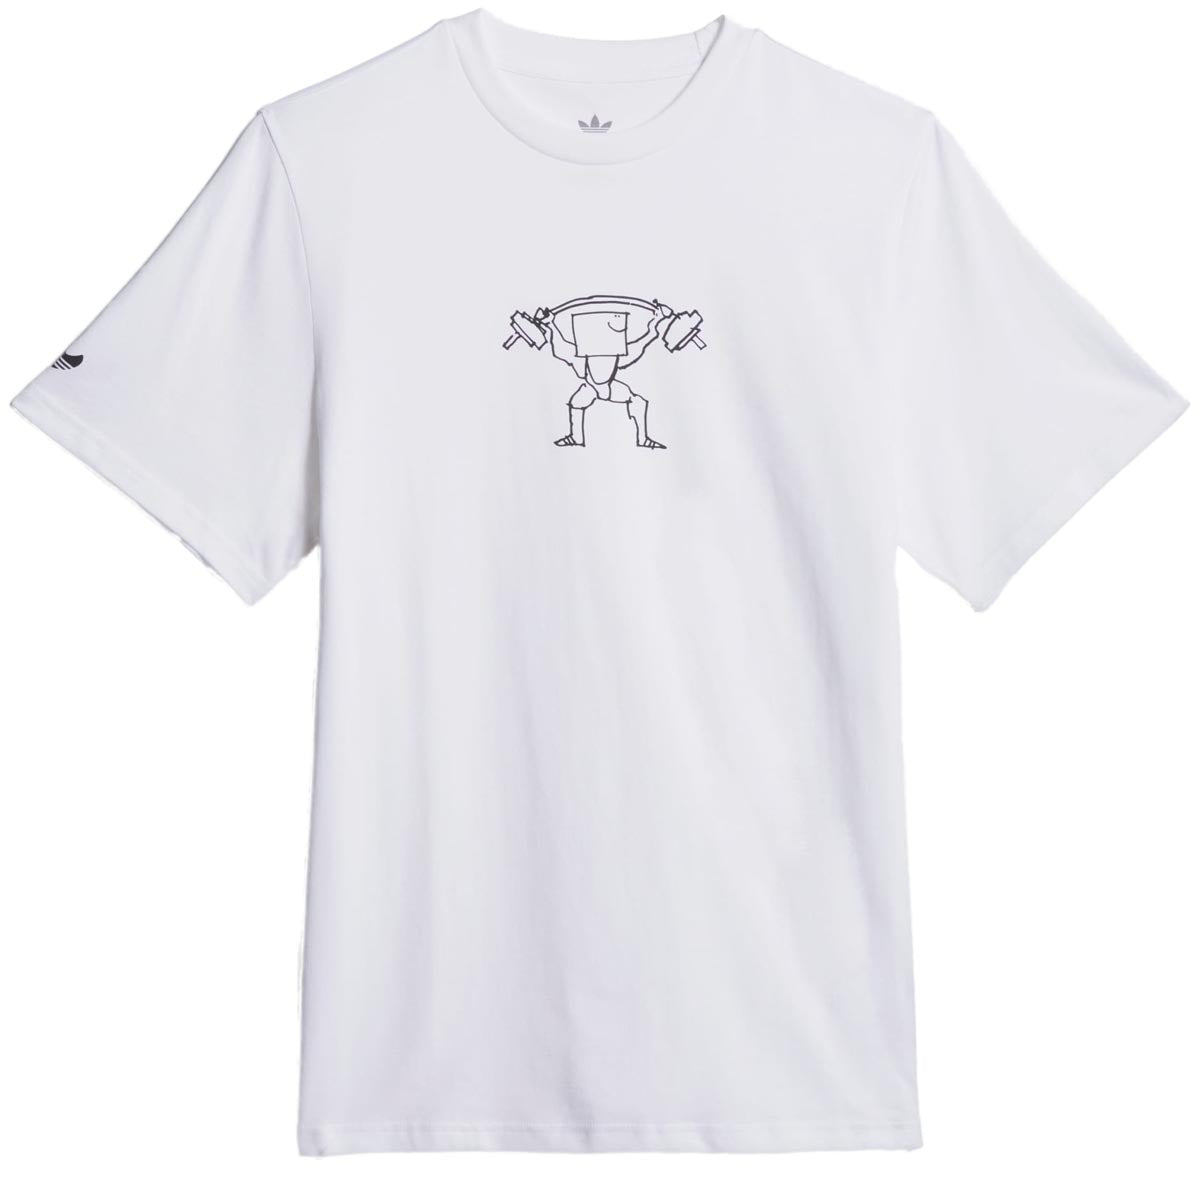 Adidas Shmoofoil Lifter T-Shirt - White image 1